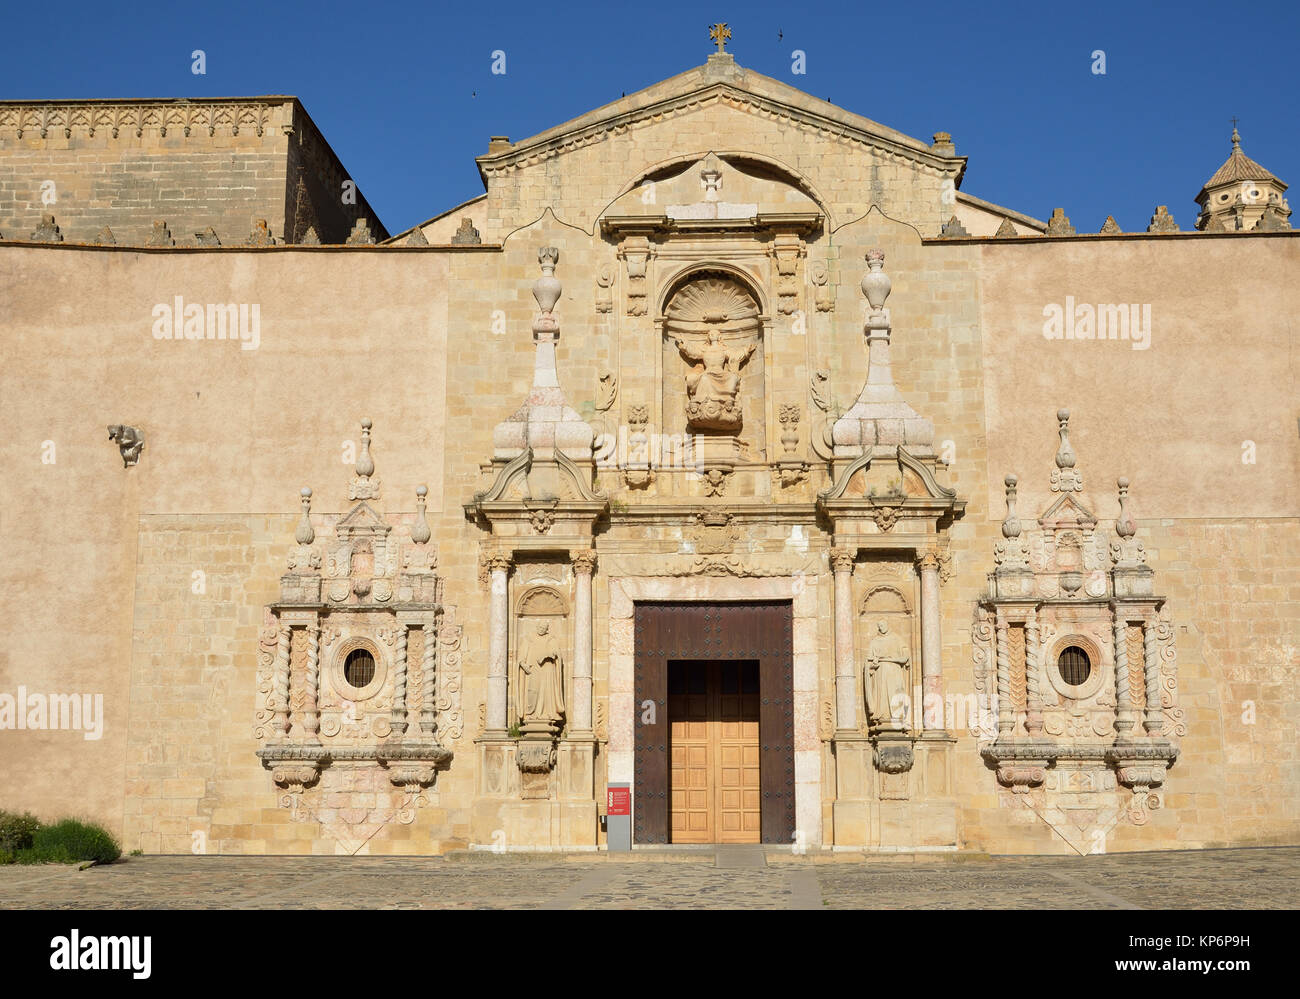 Monasterio de Poblet Foto de stock